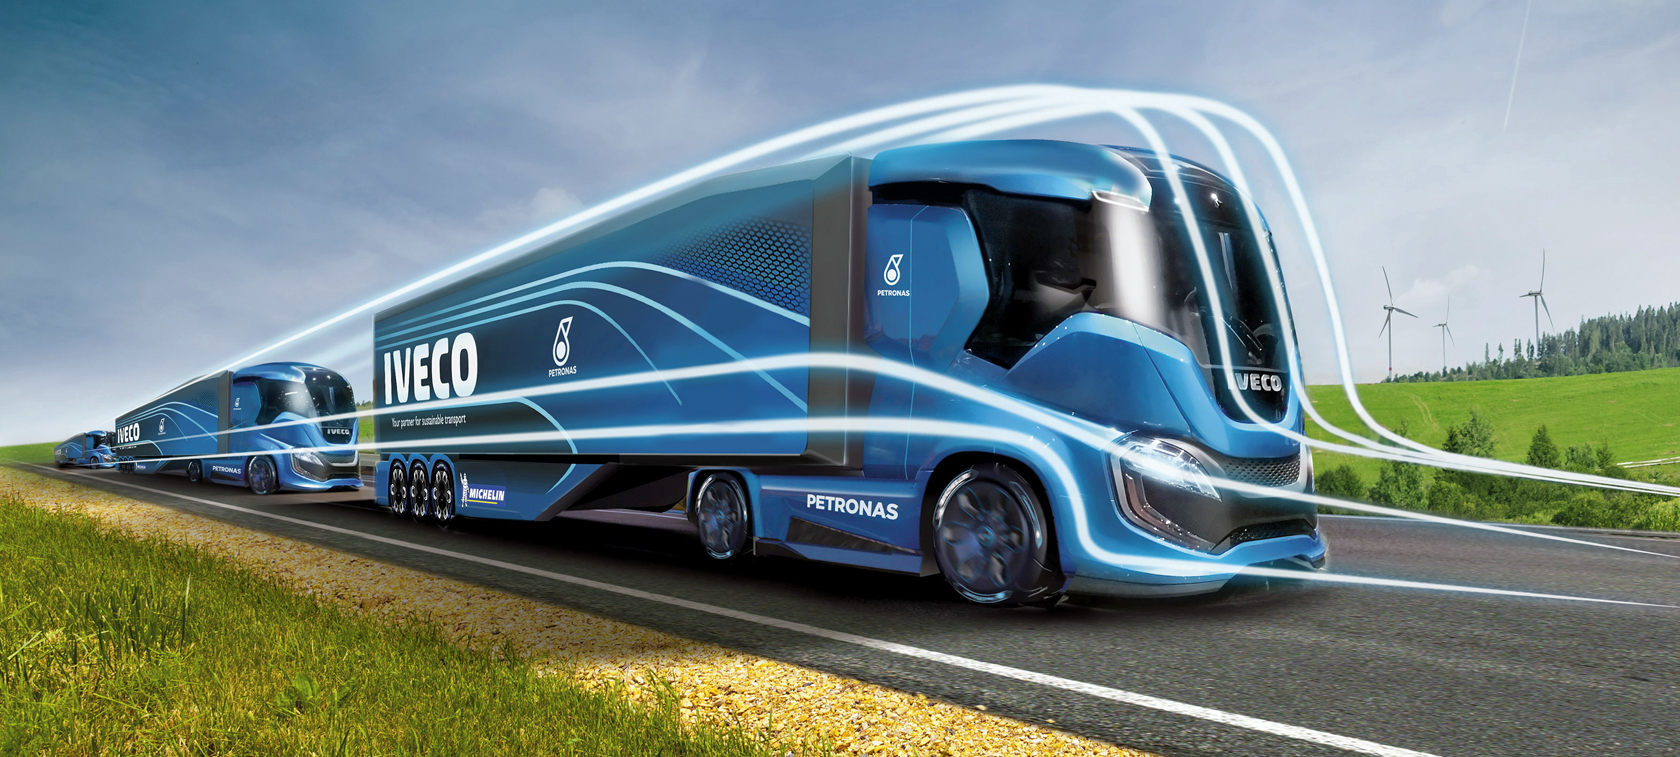 IAA 2016 - Iveco Z Truck z technologią LNG